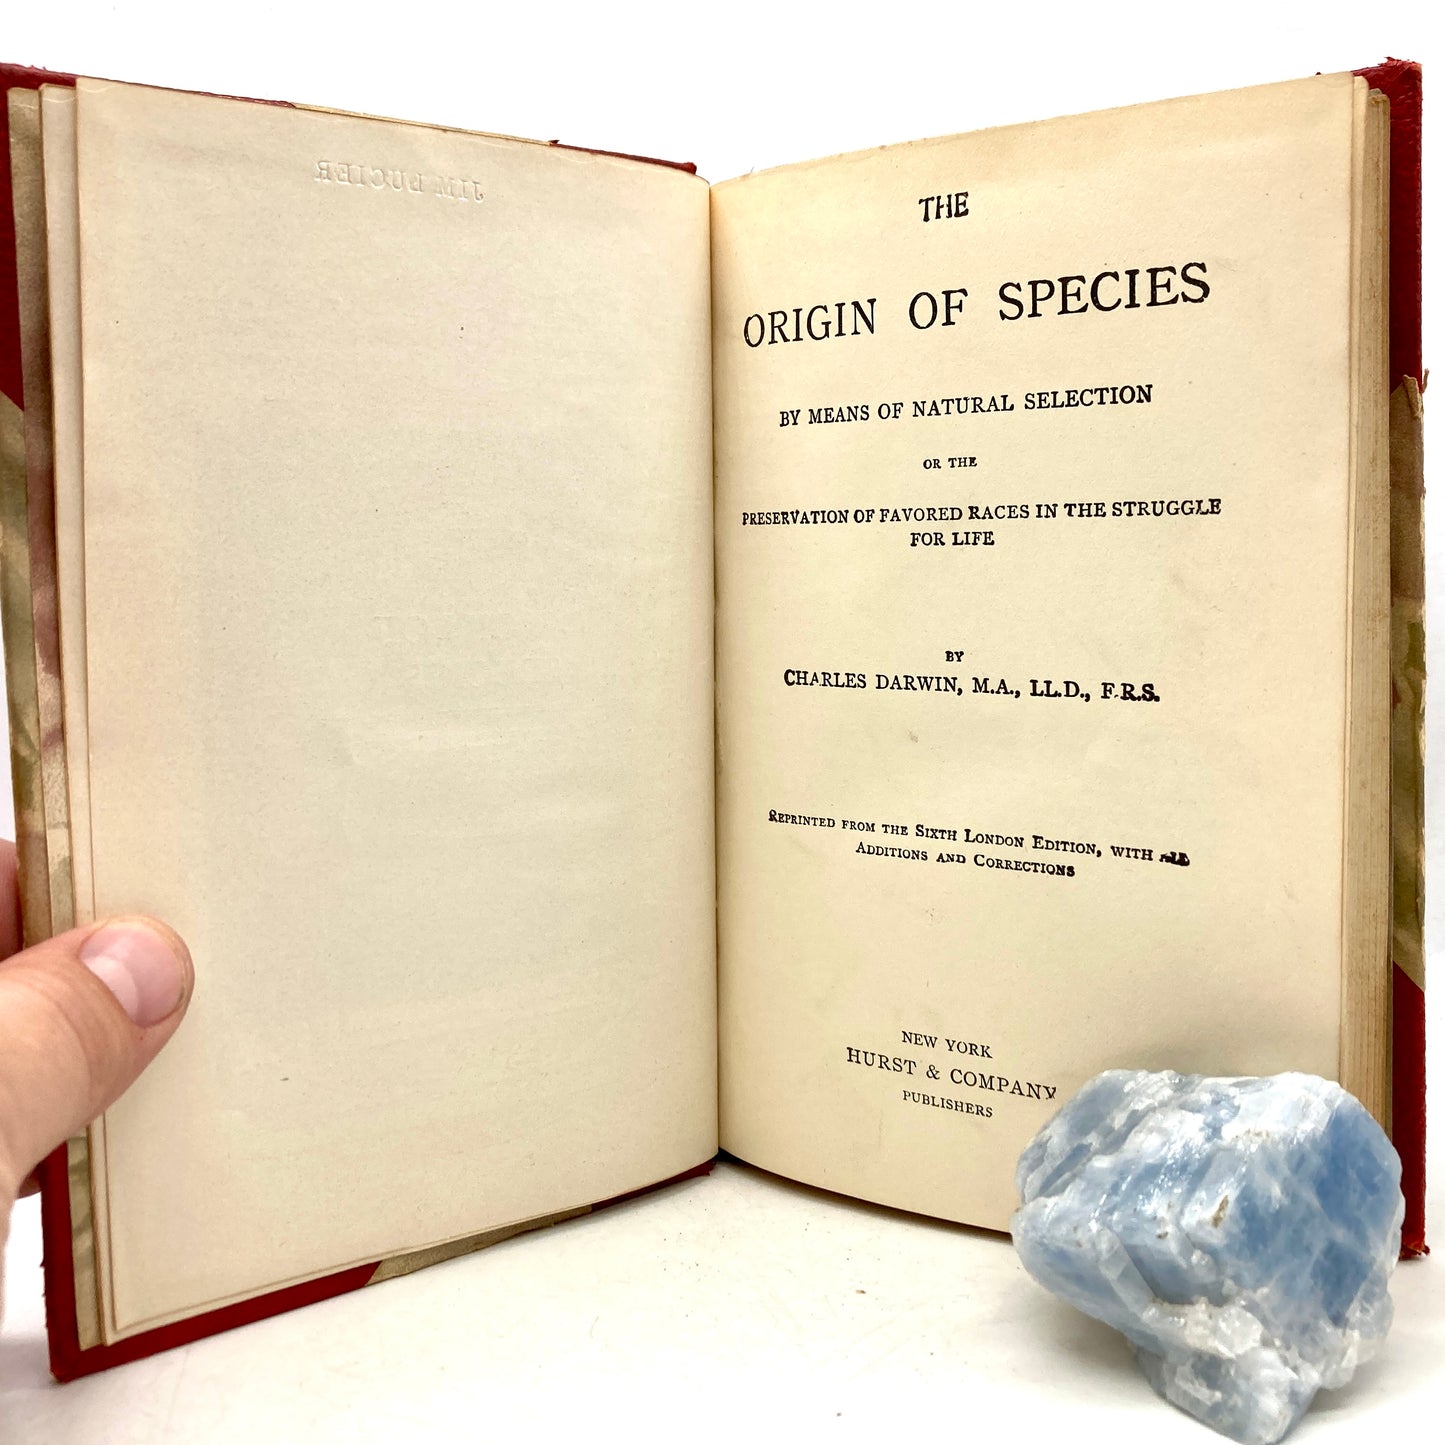 DARWIN, Charles "The Origin of Species" [Hurst & Co, n.d./c1880]